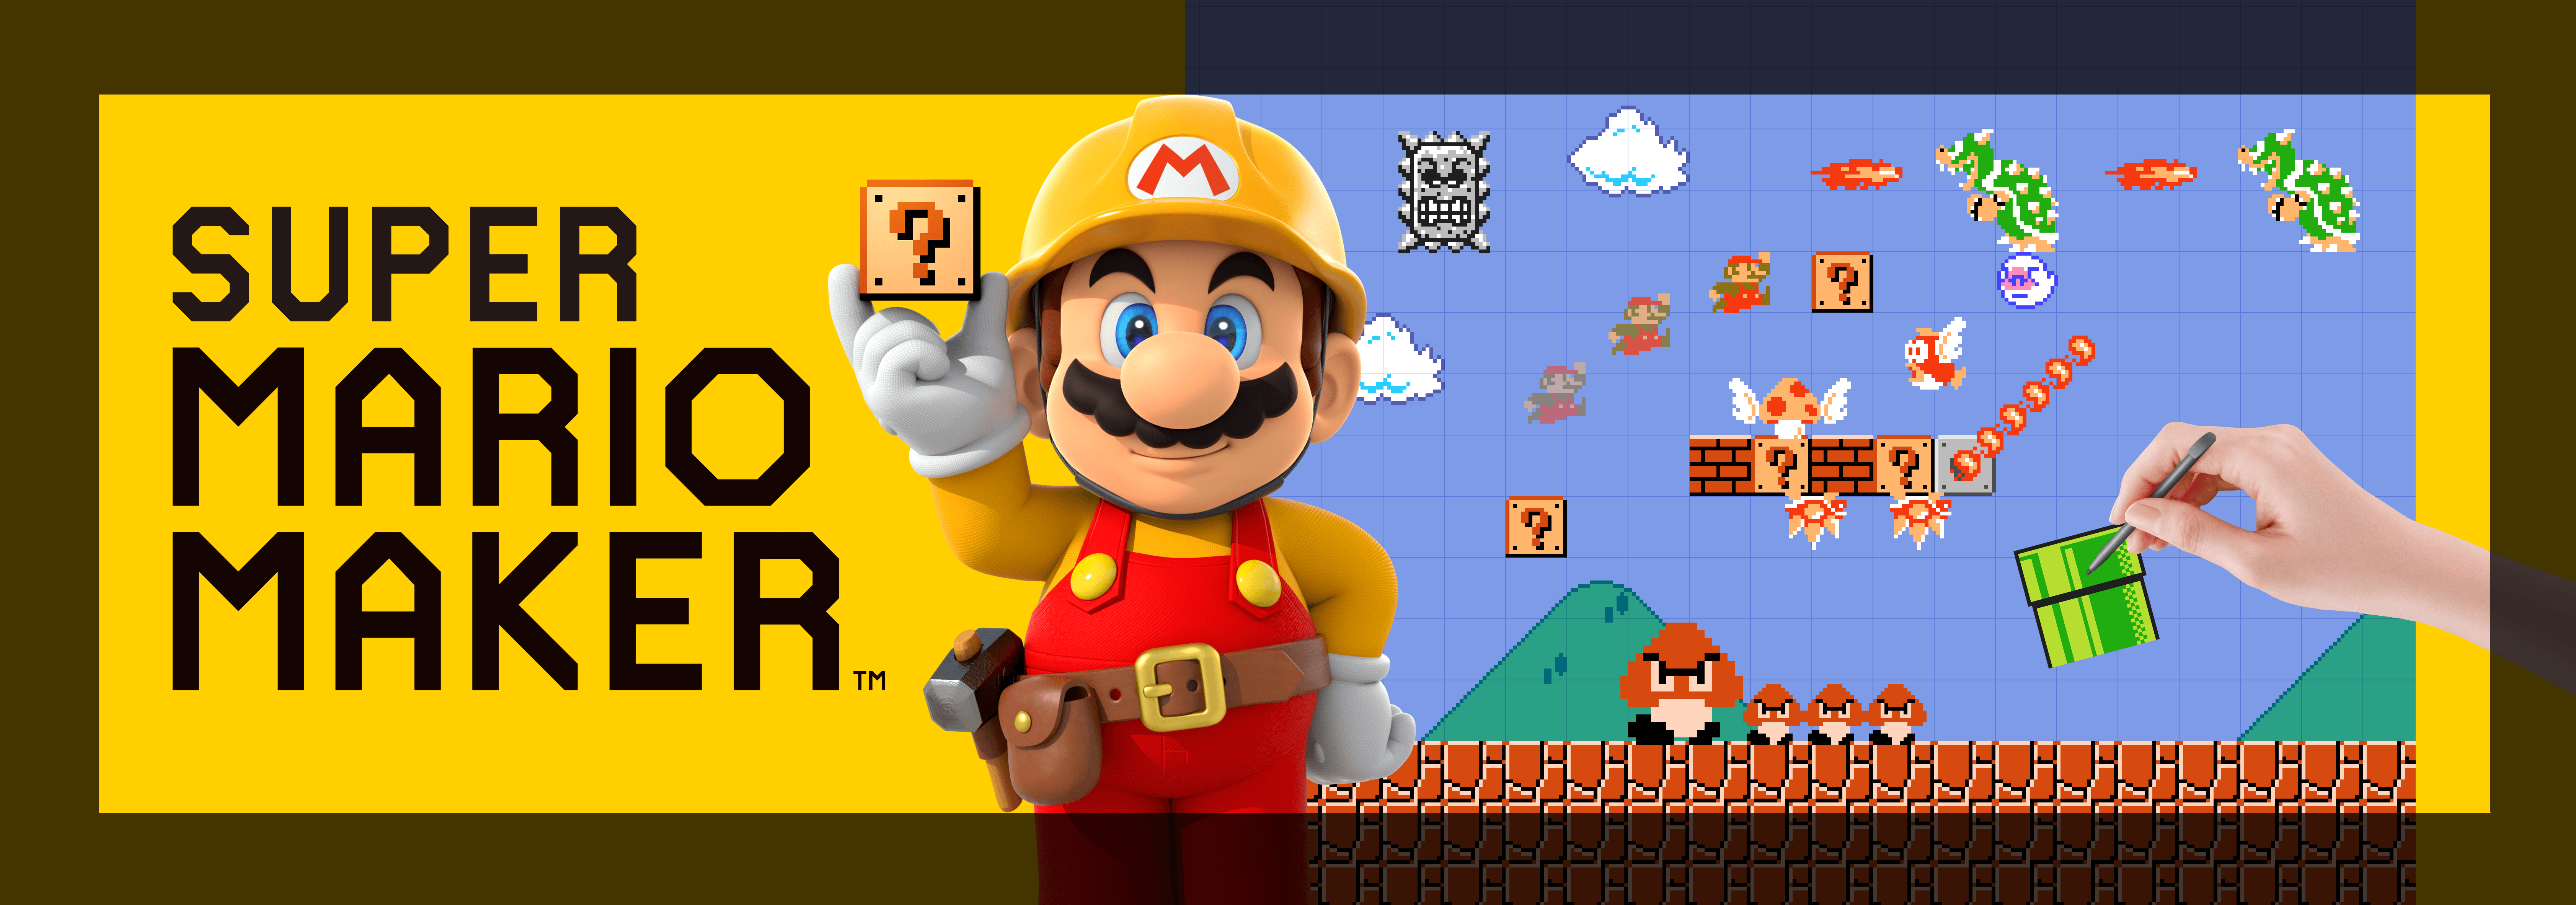 Video Game Super Mario Maker wallpaper Desktop, Phone, Tablet